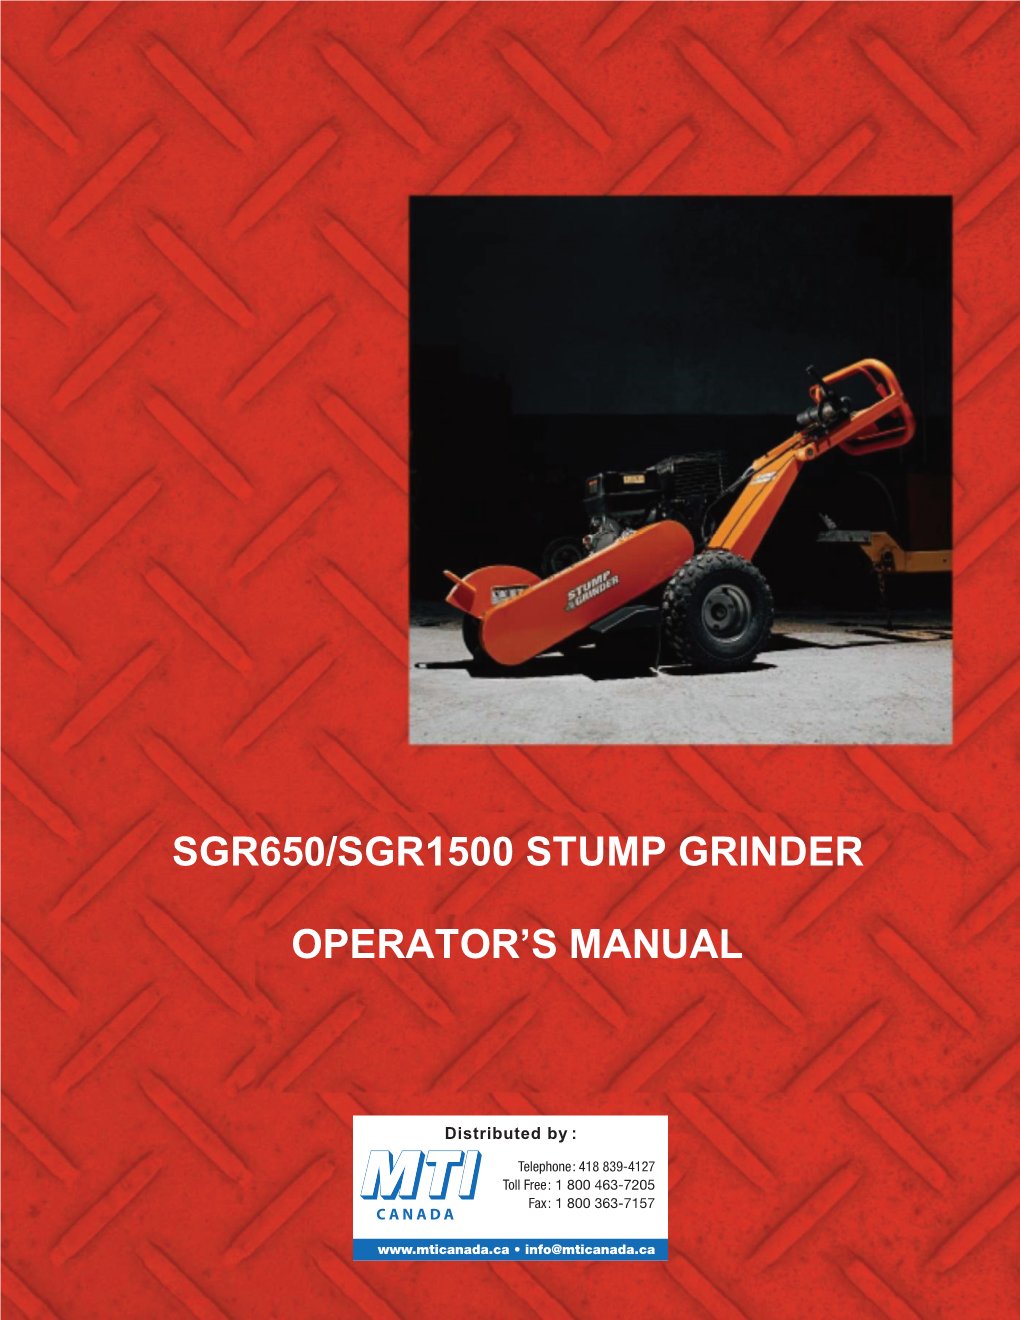 Sgr650/Sgr1500 Stump Grinder Operator's Manual